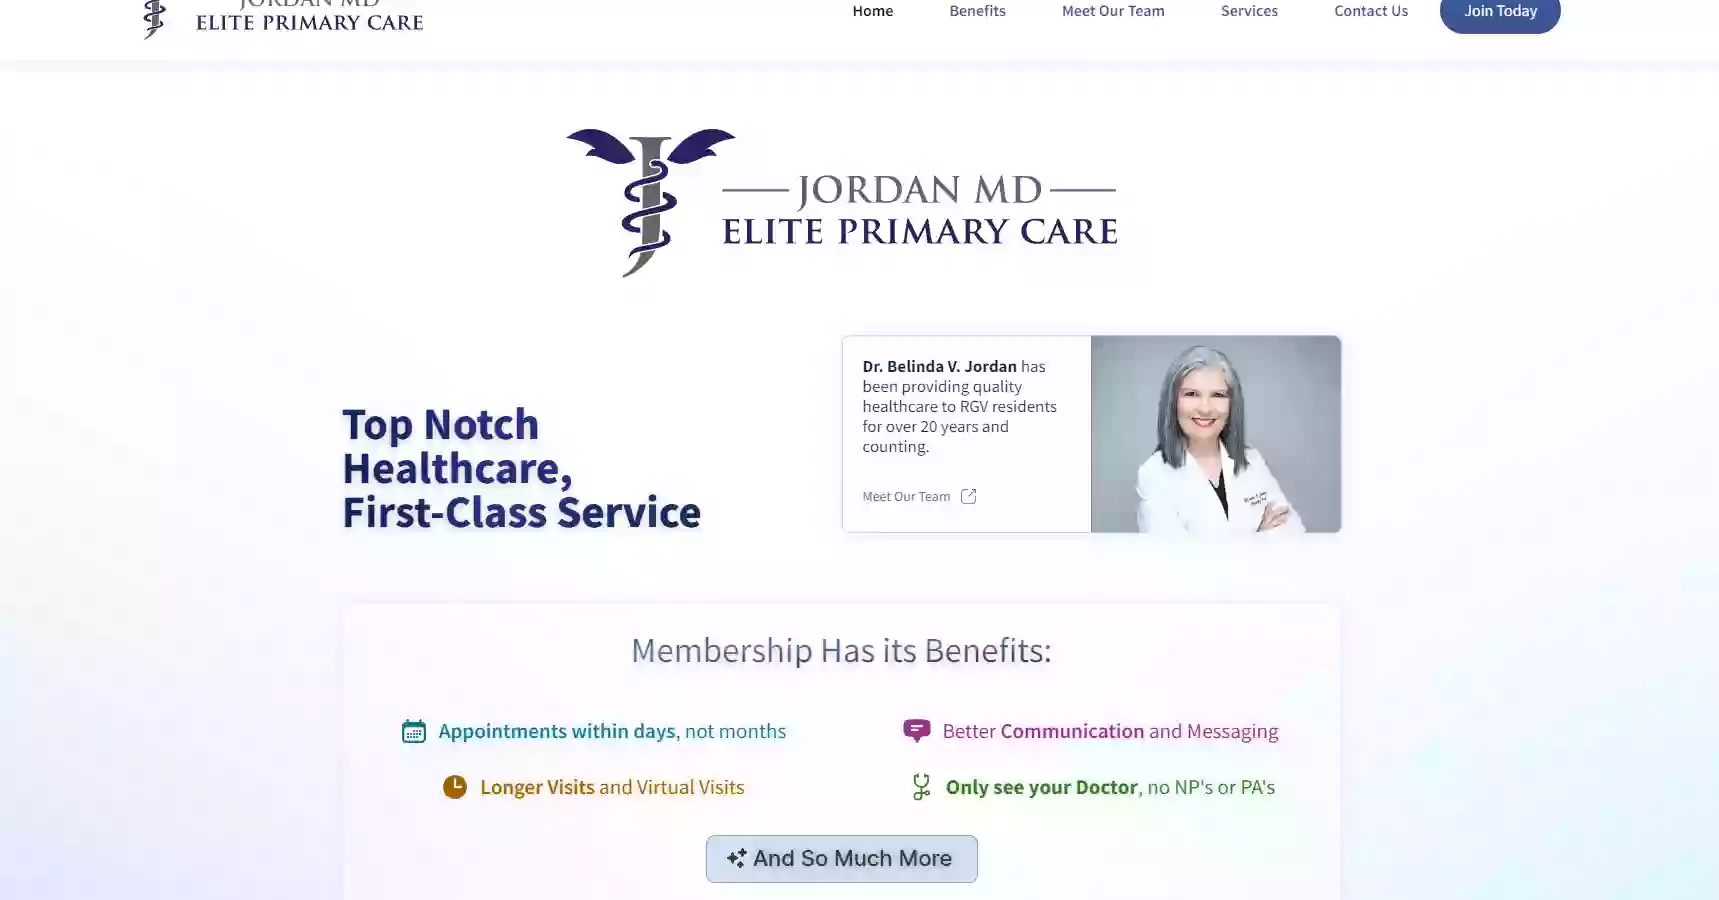 Jordan MD Elite Primary Care